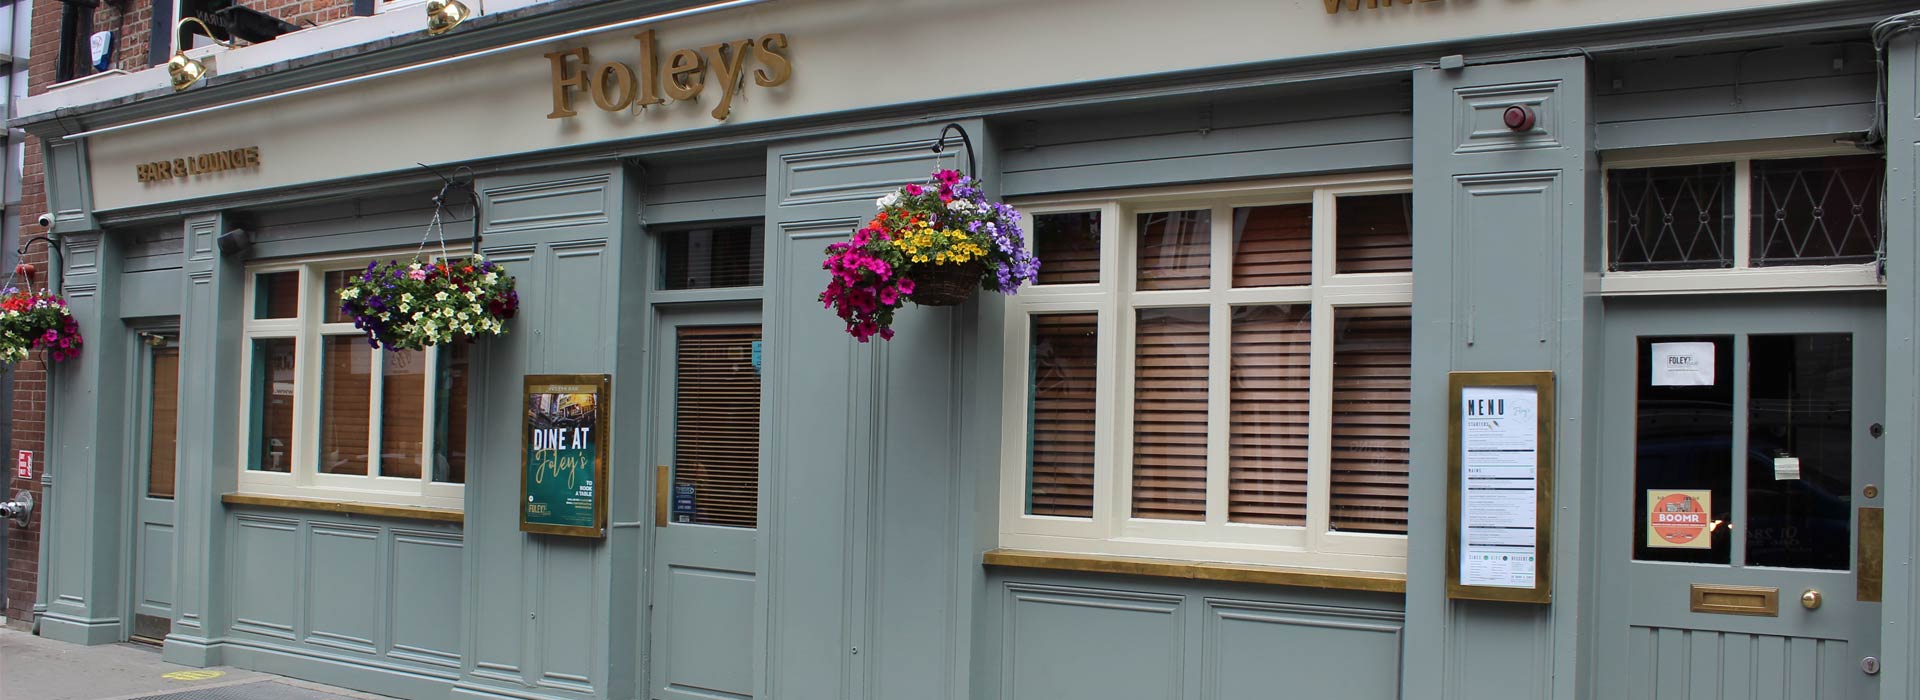 Foley's Bar & Restaurant